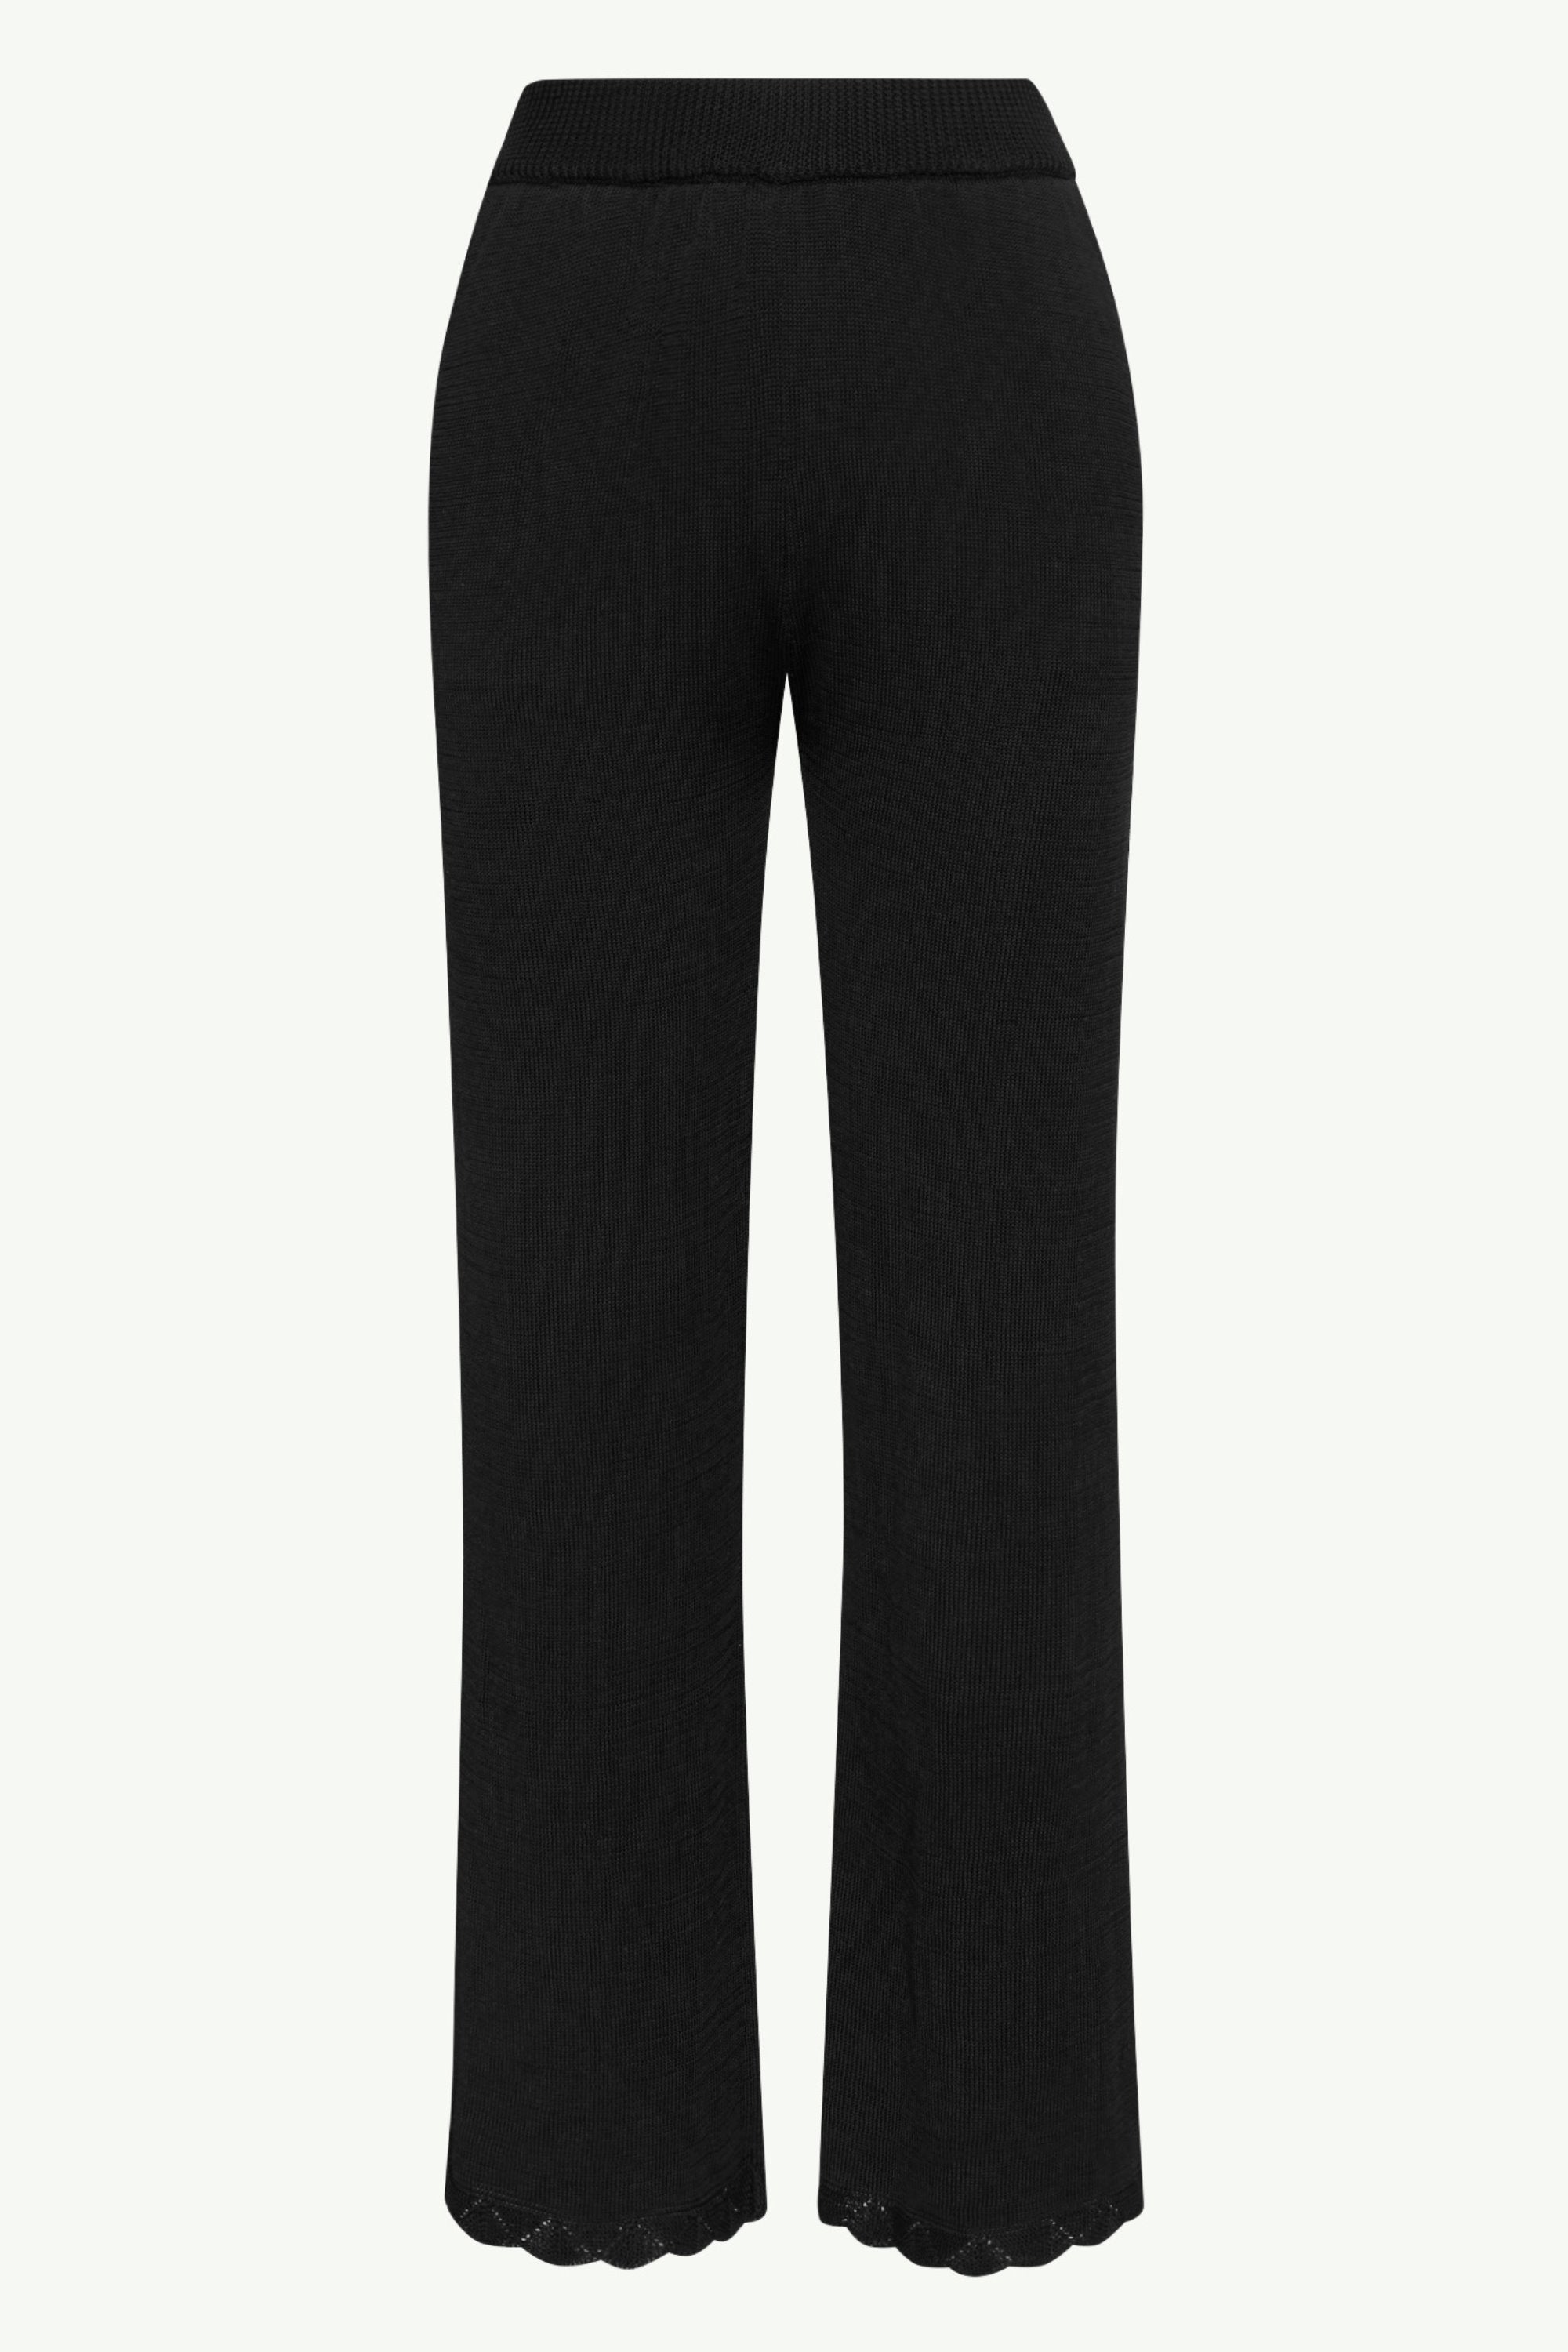 Kendall Crochet Wide Leg Pants - Black Clothing epschoolboard 